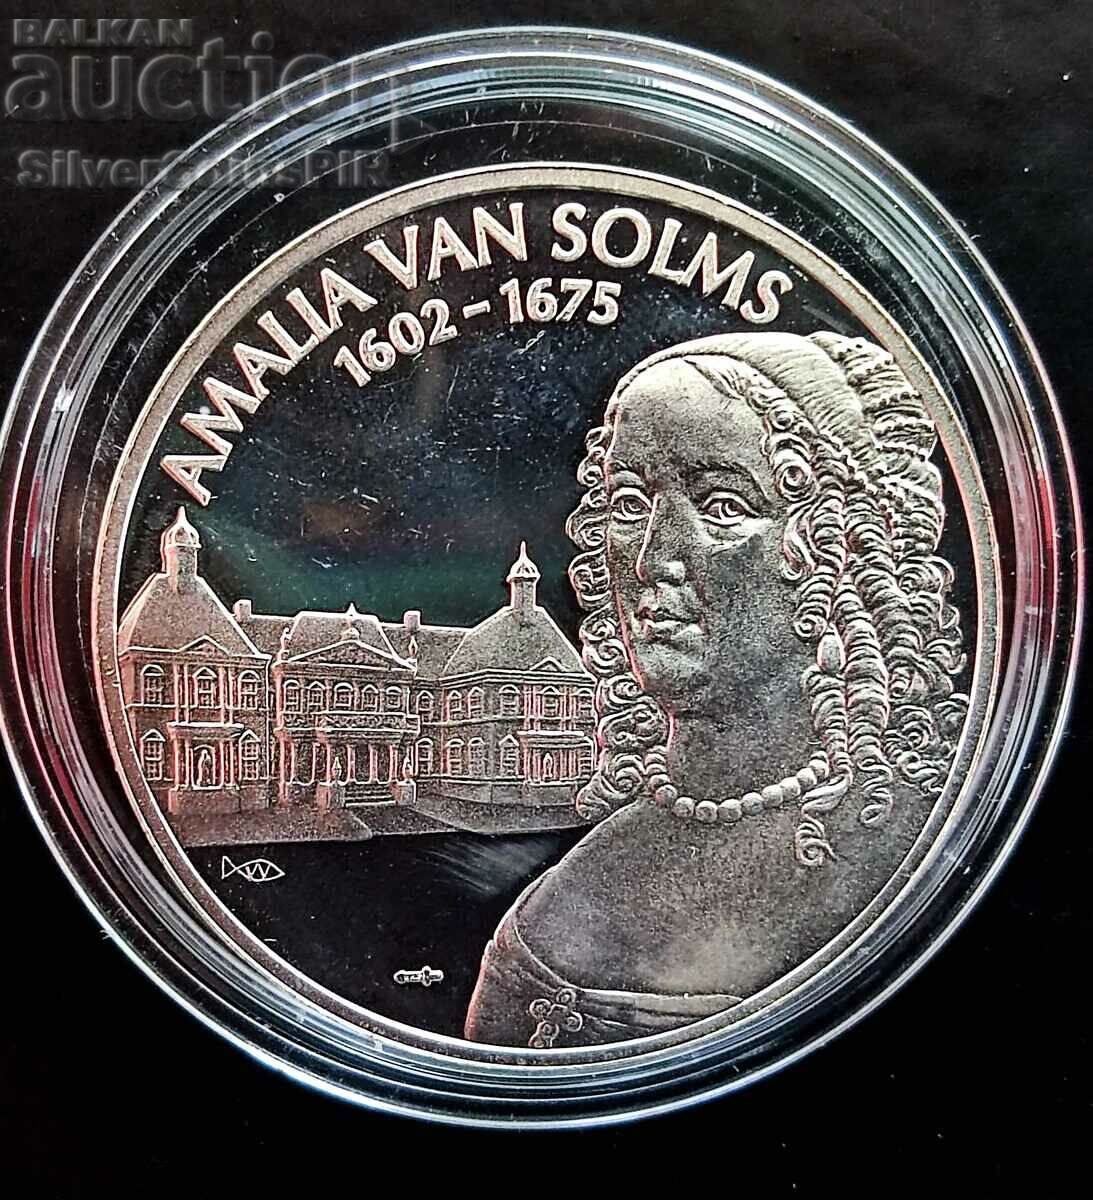 Medalia de argint Amelia van Sooms Olanda